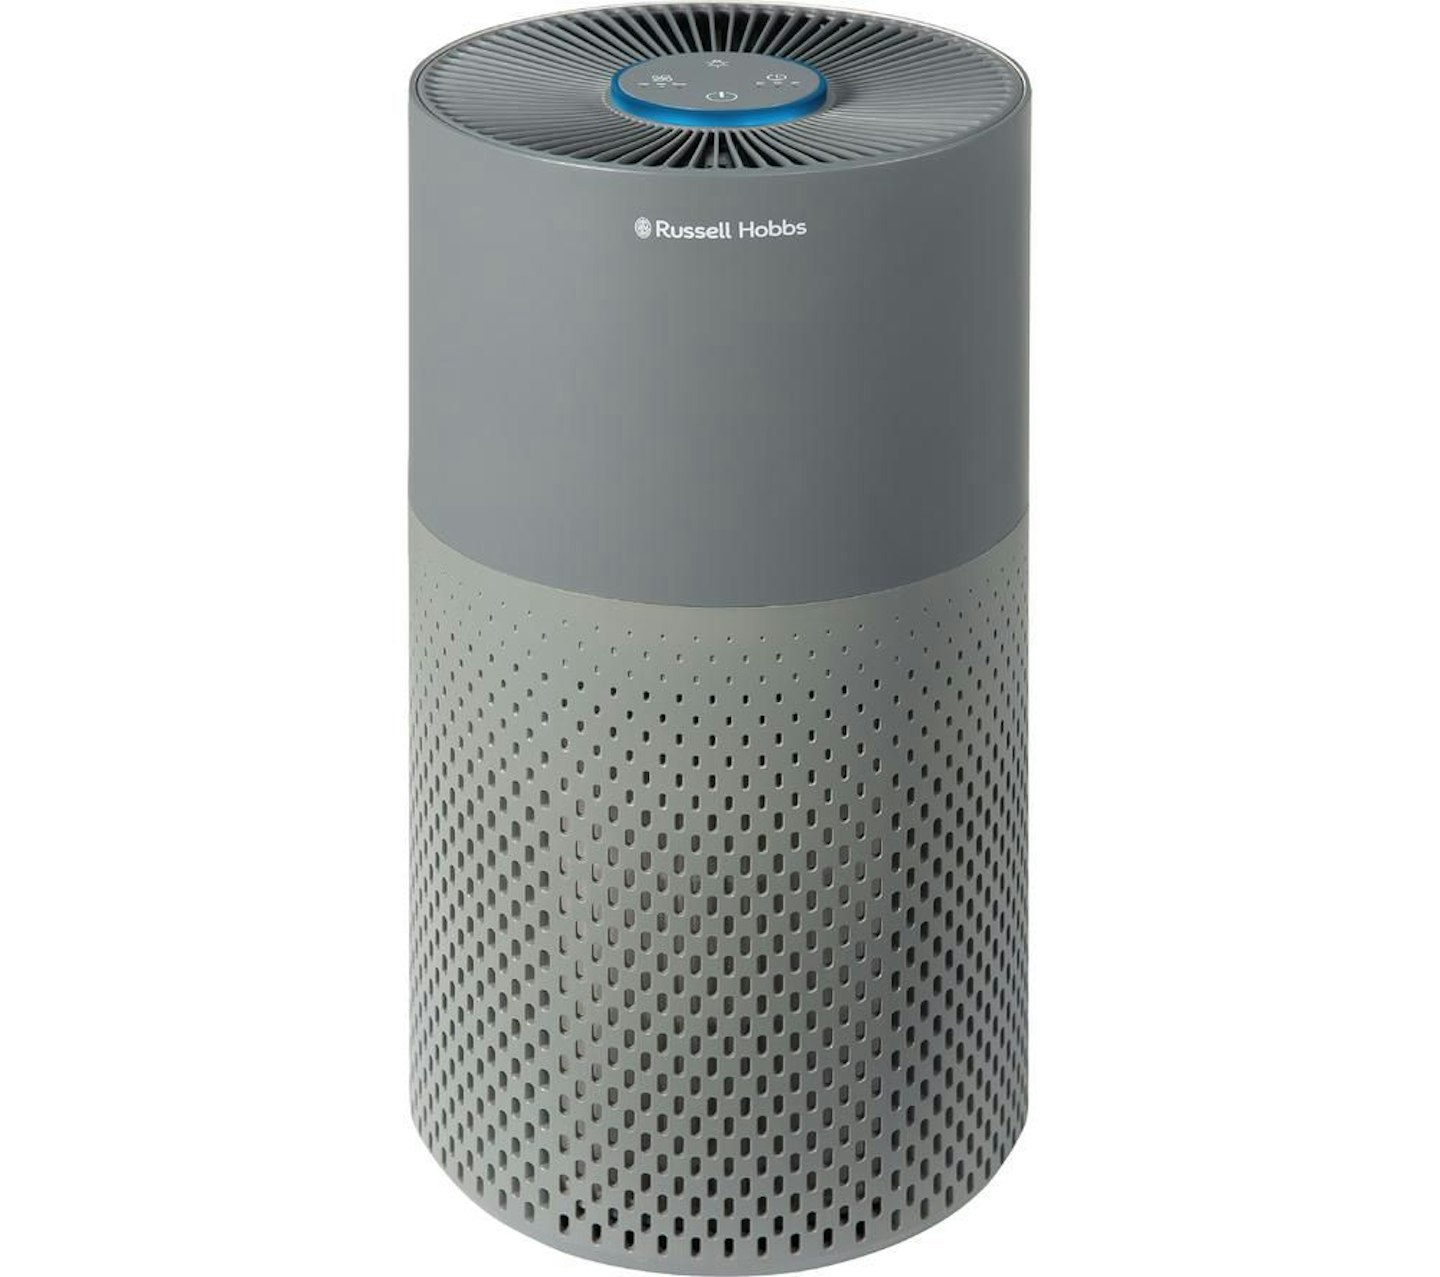 Russell Hobbs Clean Air Pro Purifier